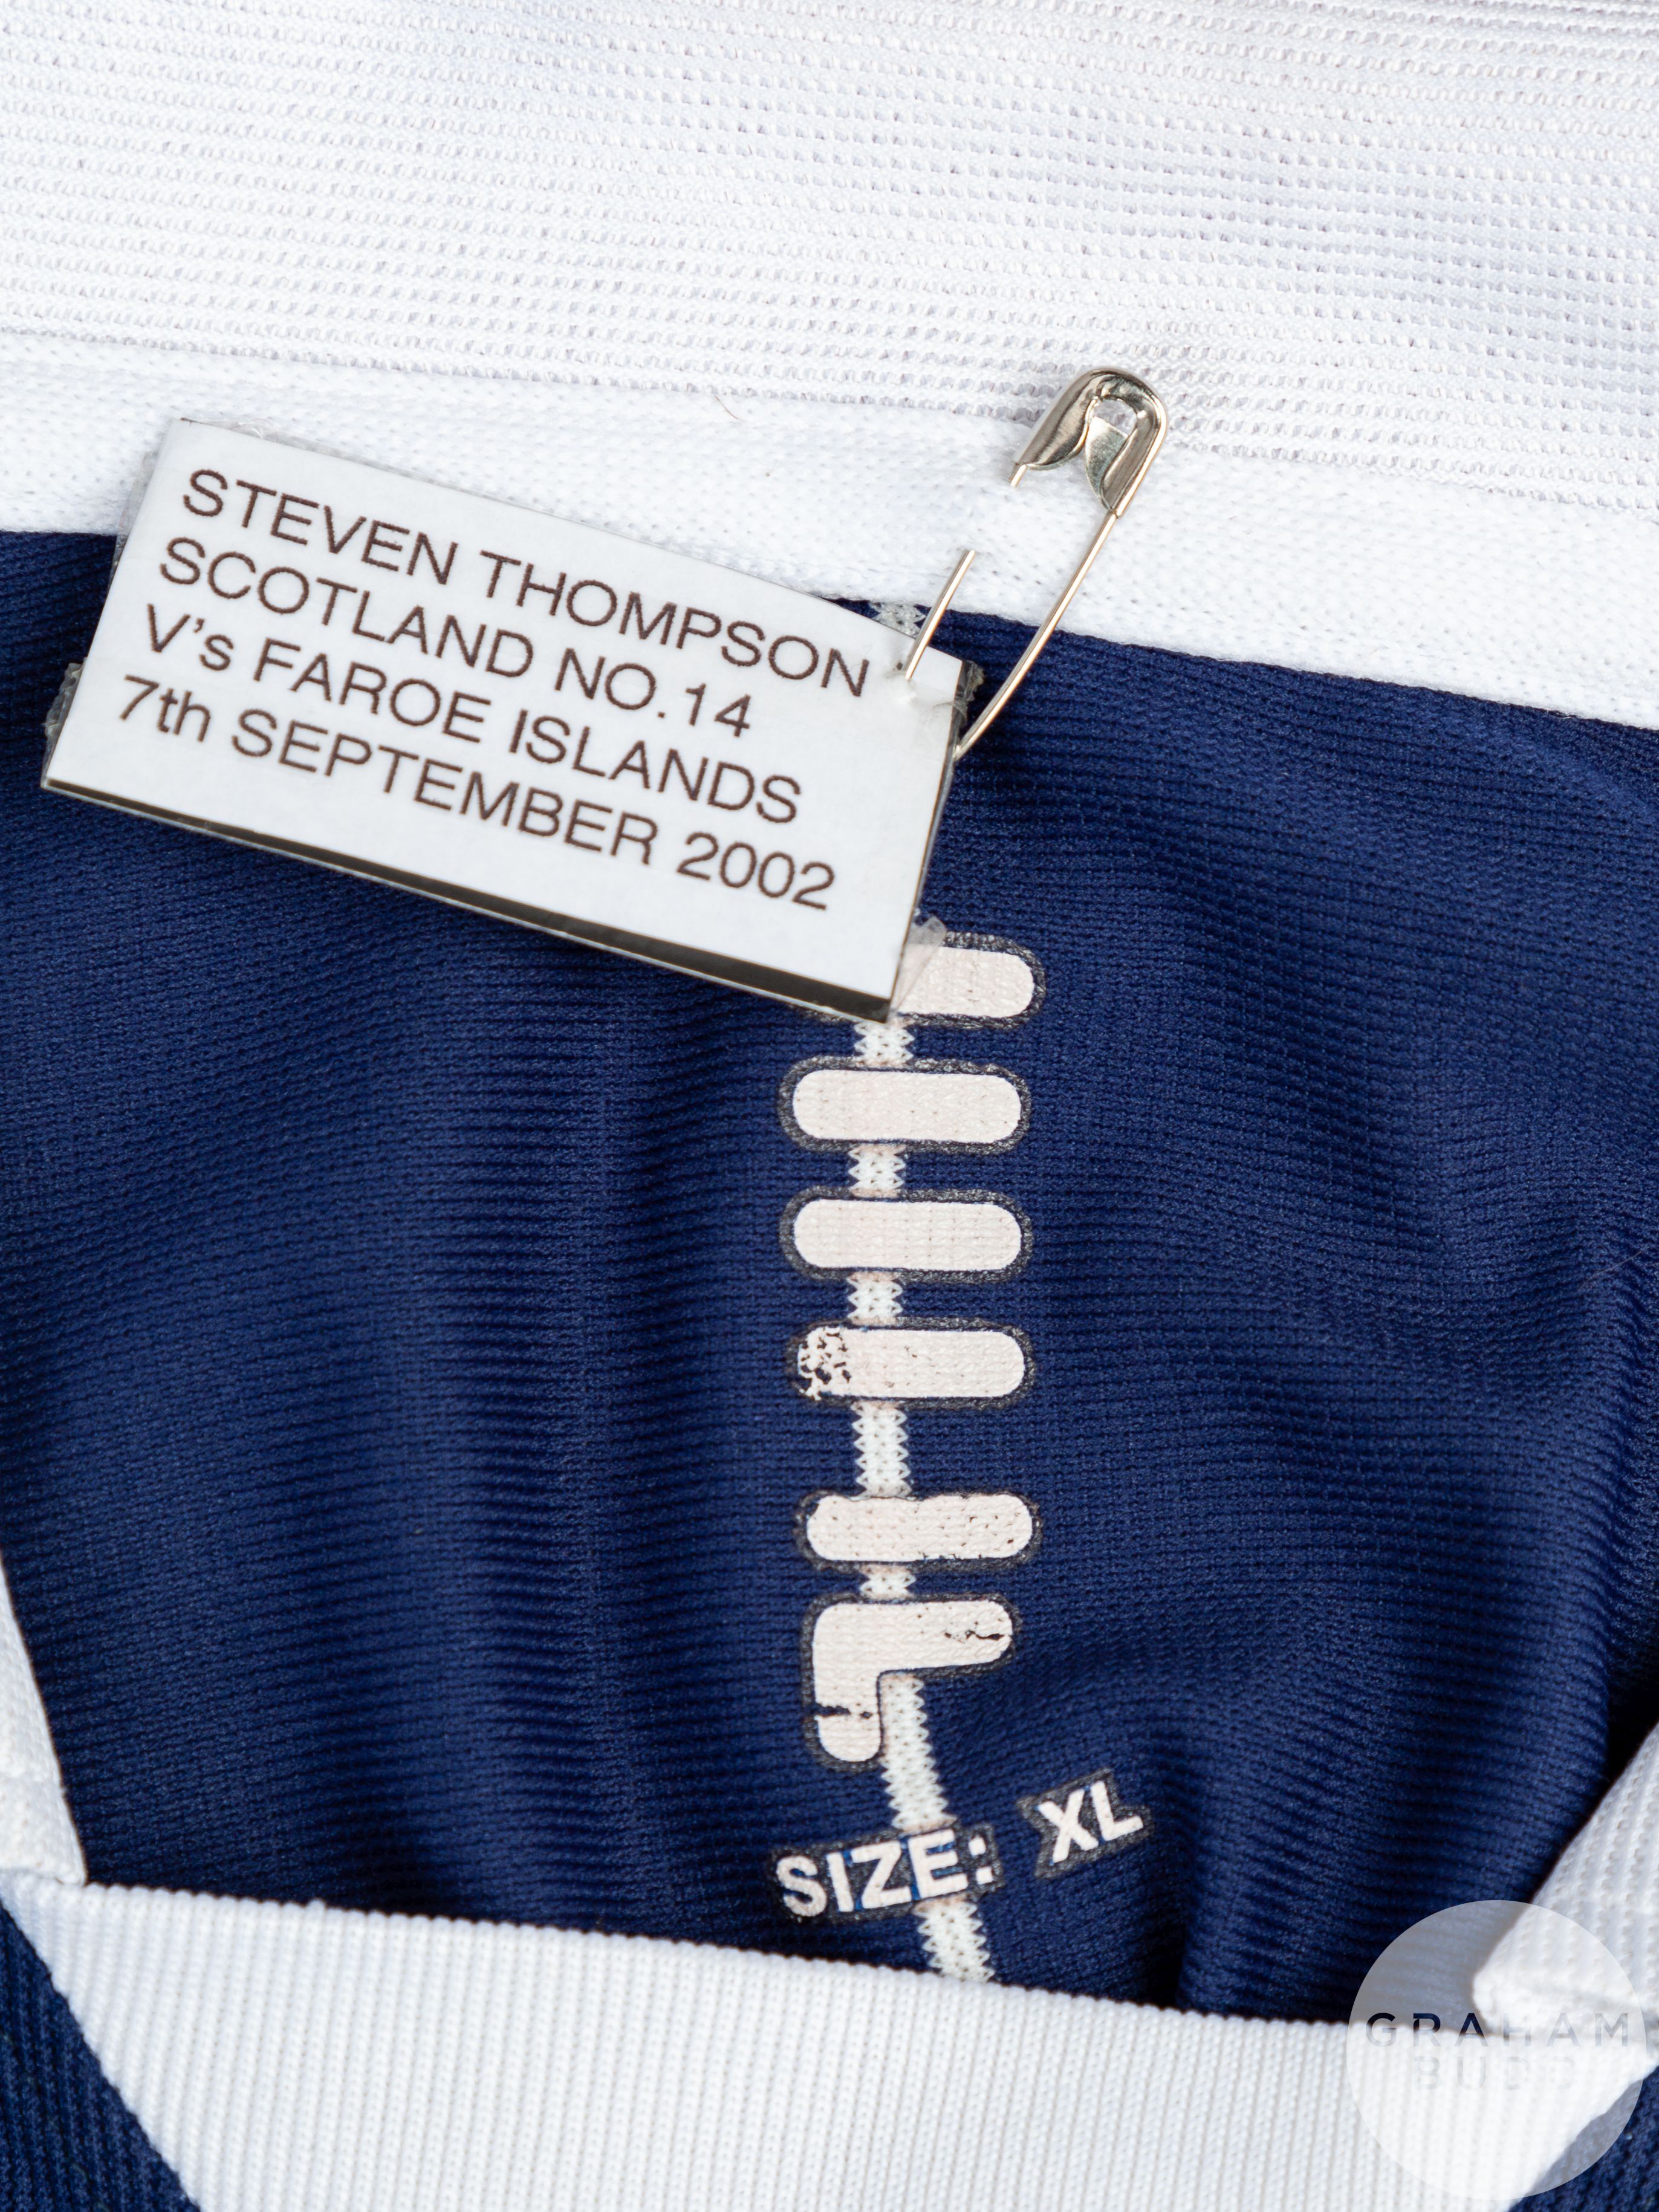 Steven Thompson blue and white No.14 Scotland short-sleeved shirt, 2002 - Image 5 of 5